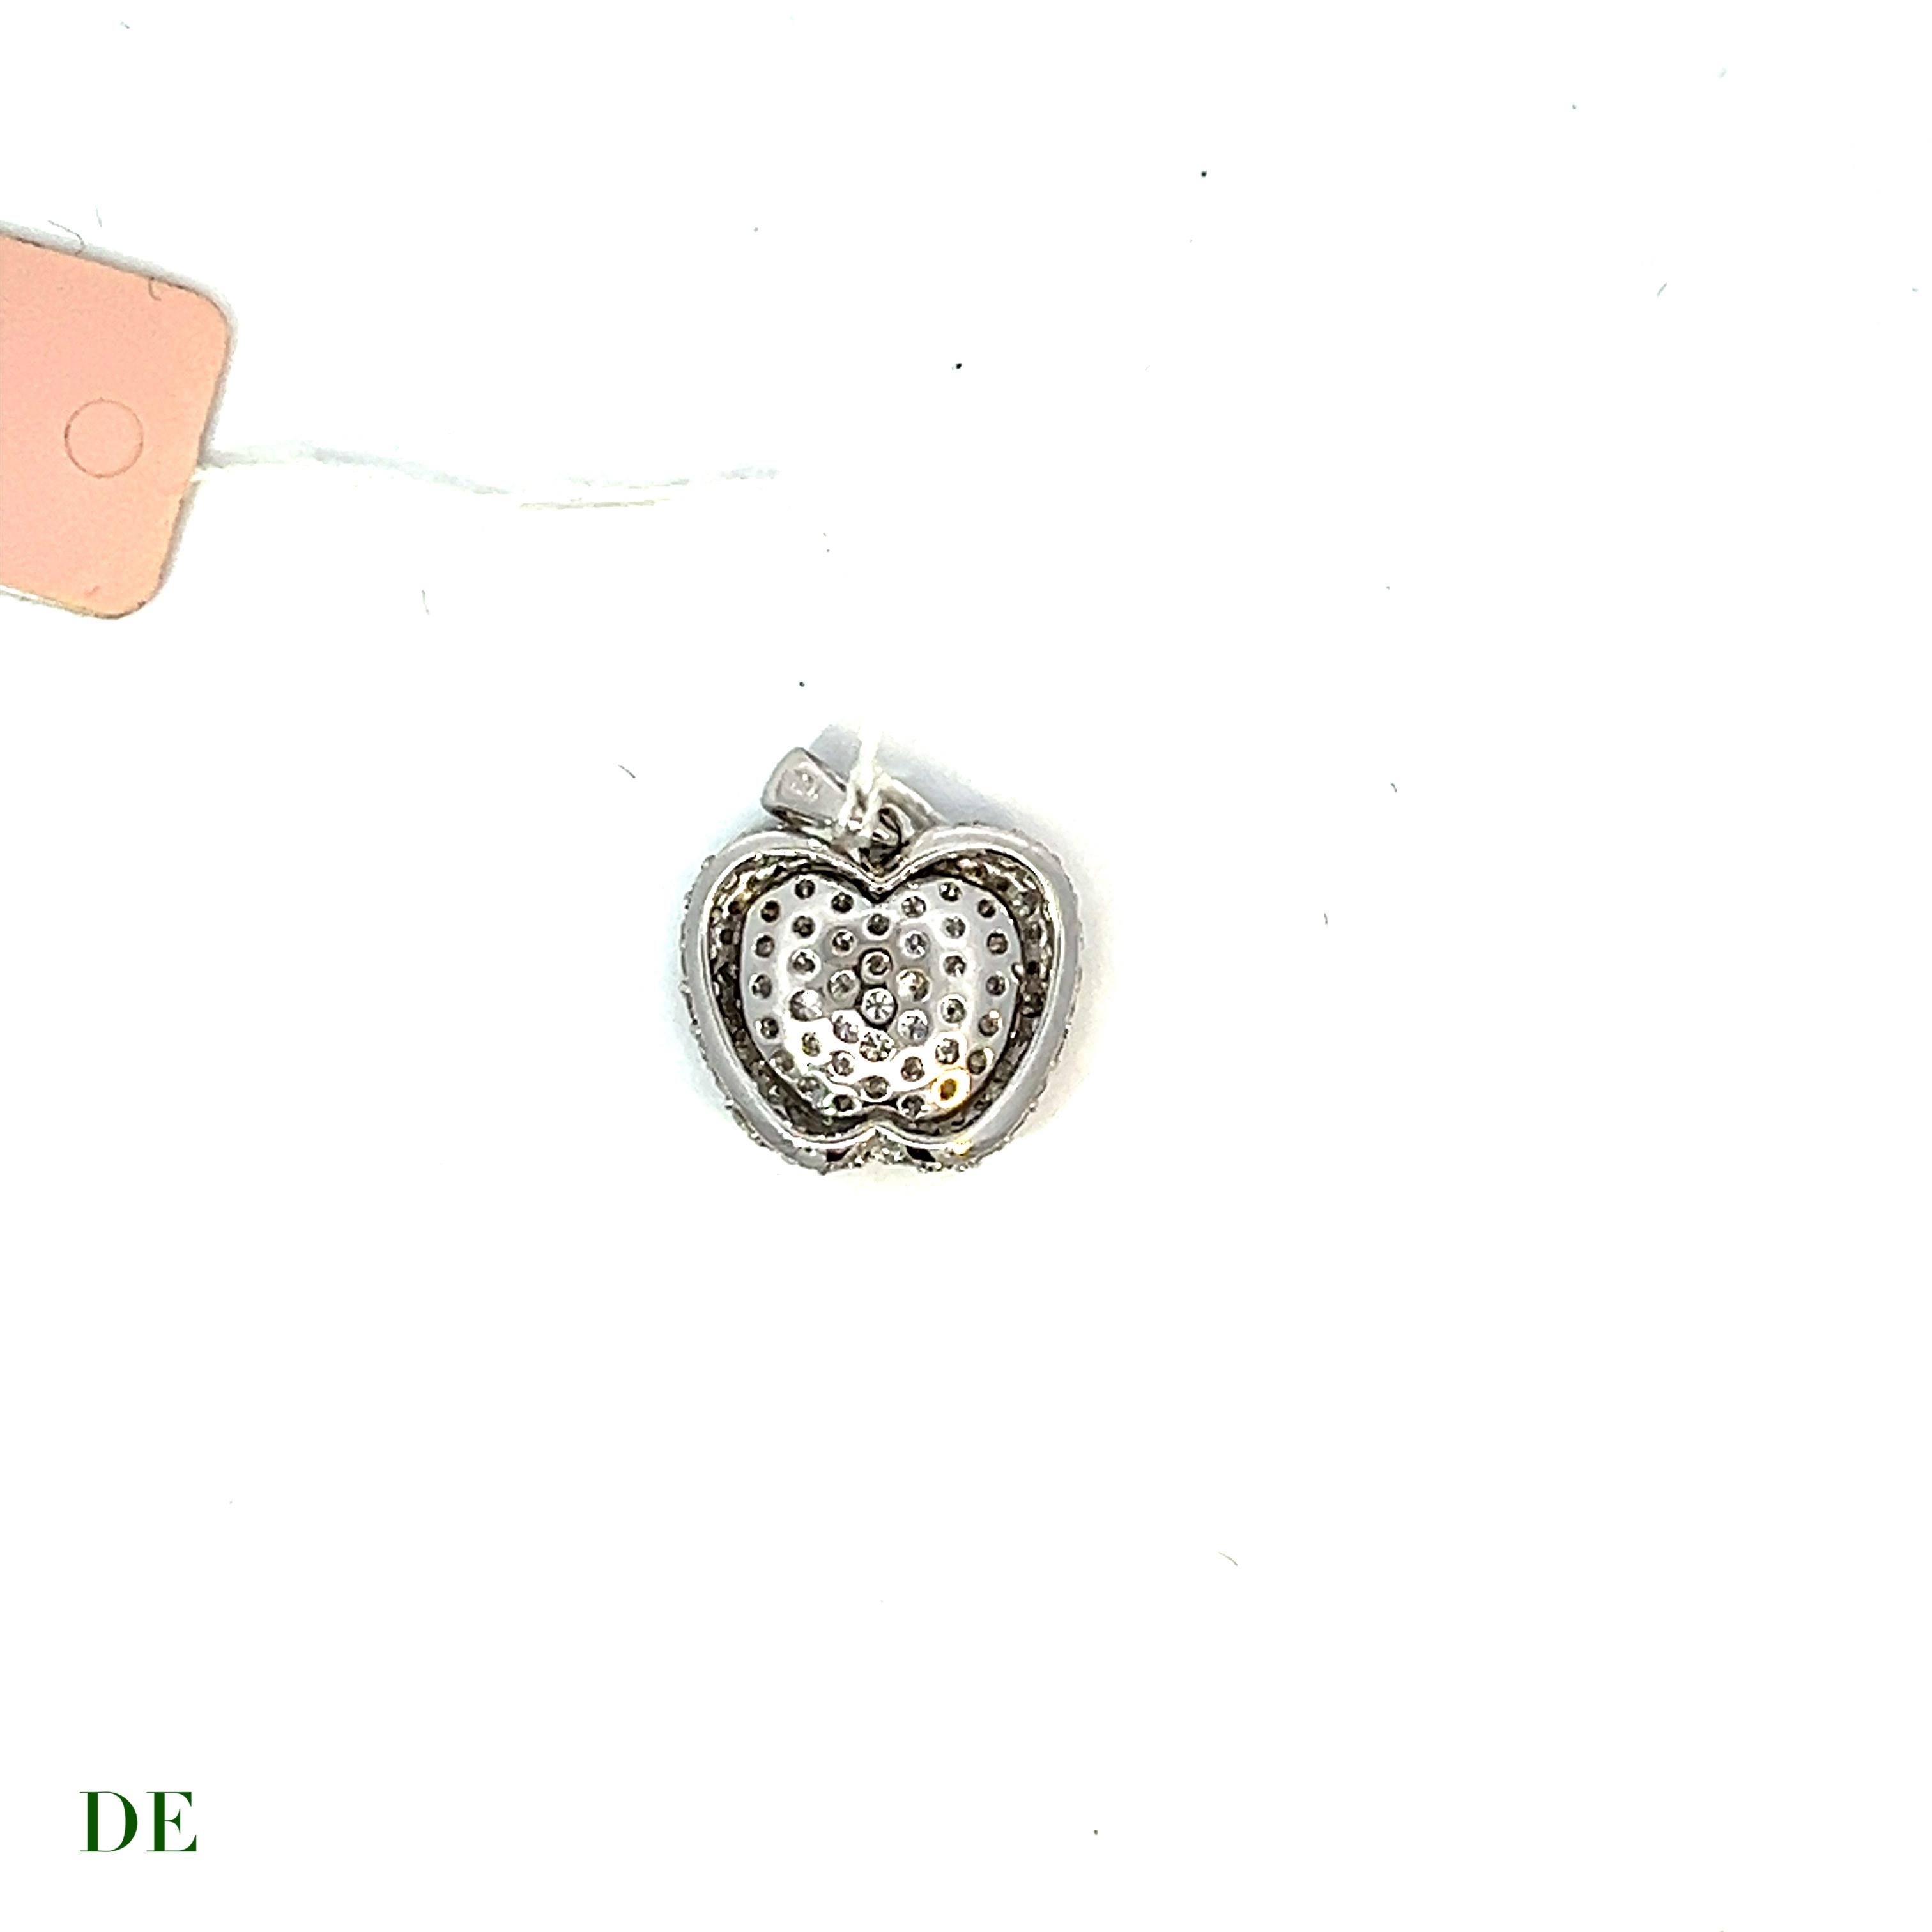 Brilliant Cut Timeless Beauty Love at First Sight Adam Eve Apple 18k 1.44 ct Diamond Pendant For Sale